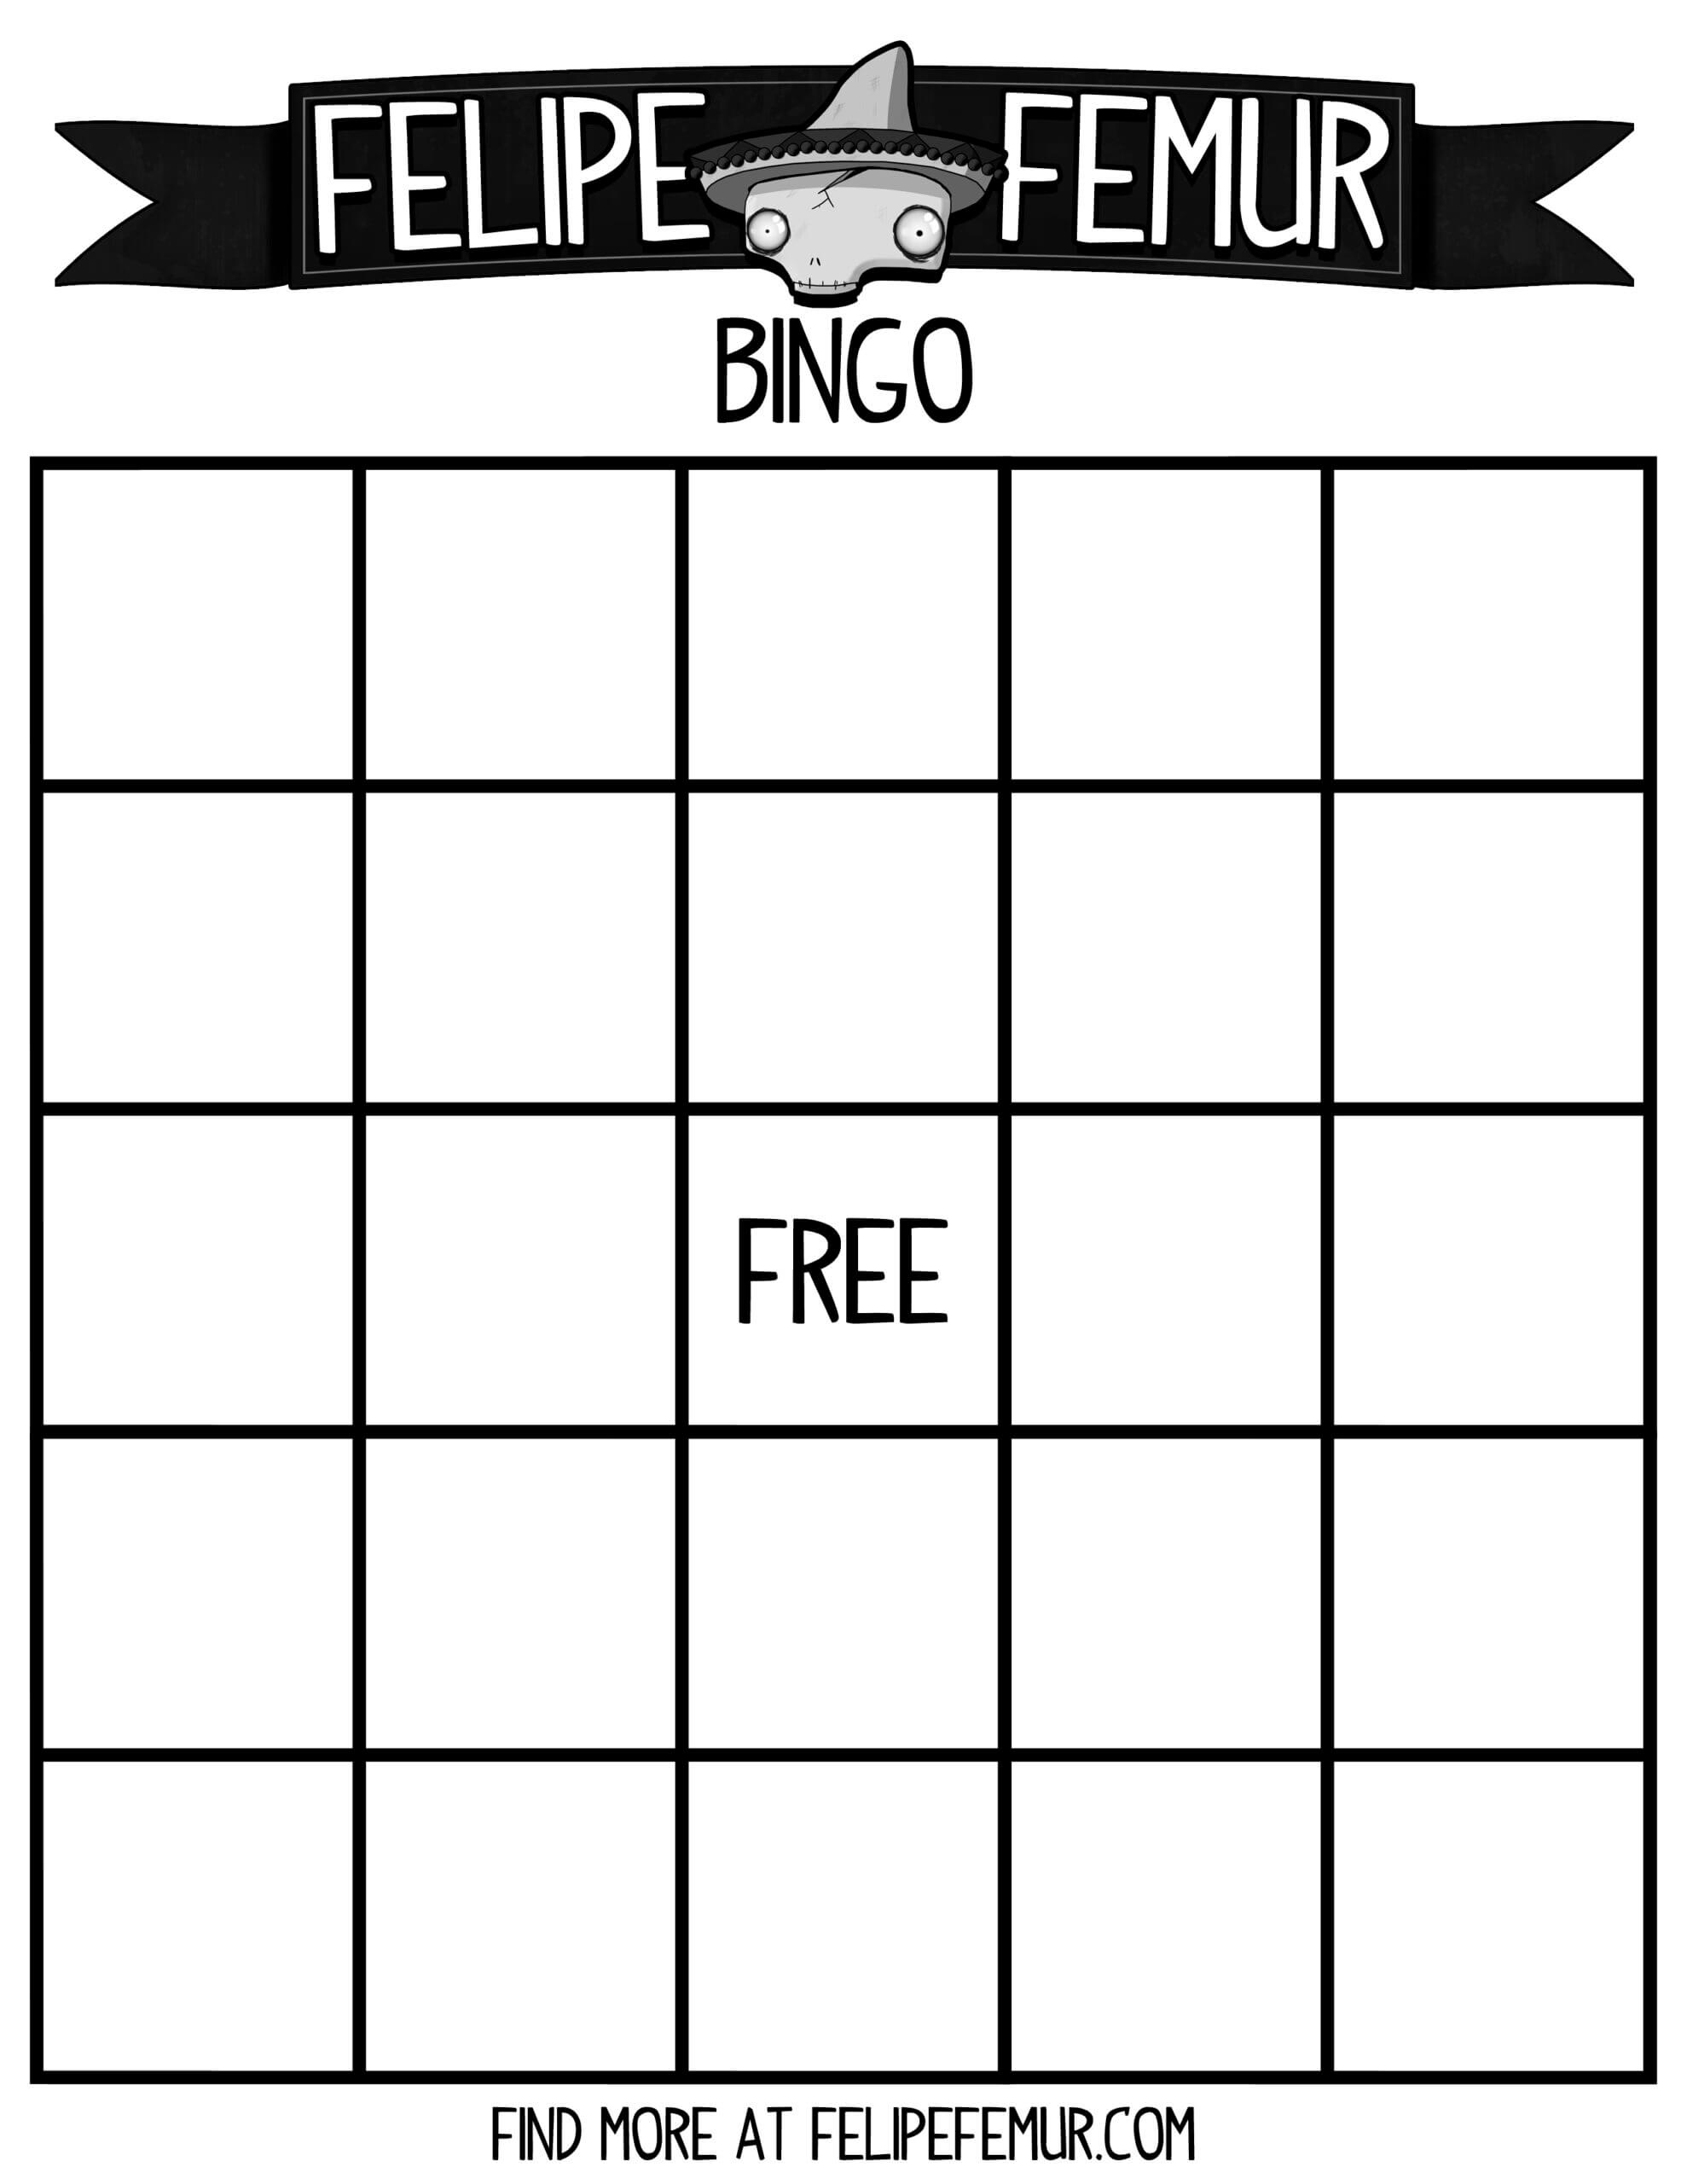 014 Template Ideas Free Bingo Card Grace And Good Eats With Regard To Bingo Card Template Word